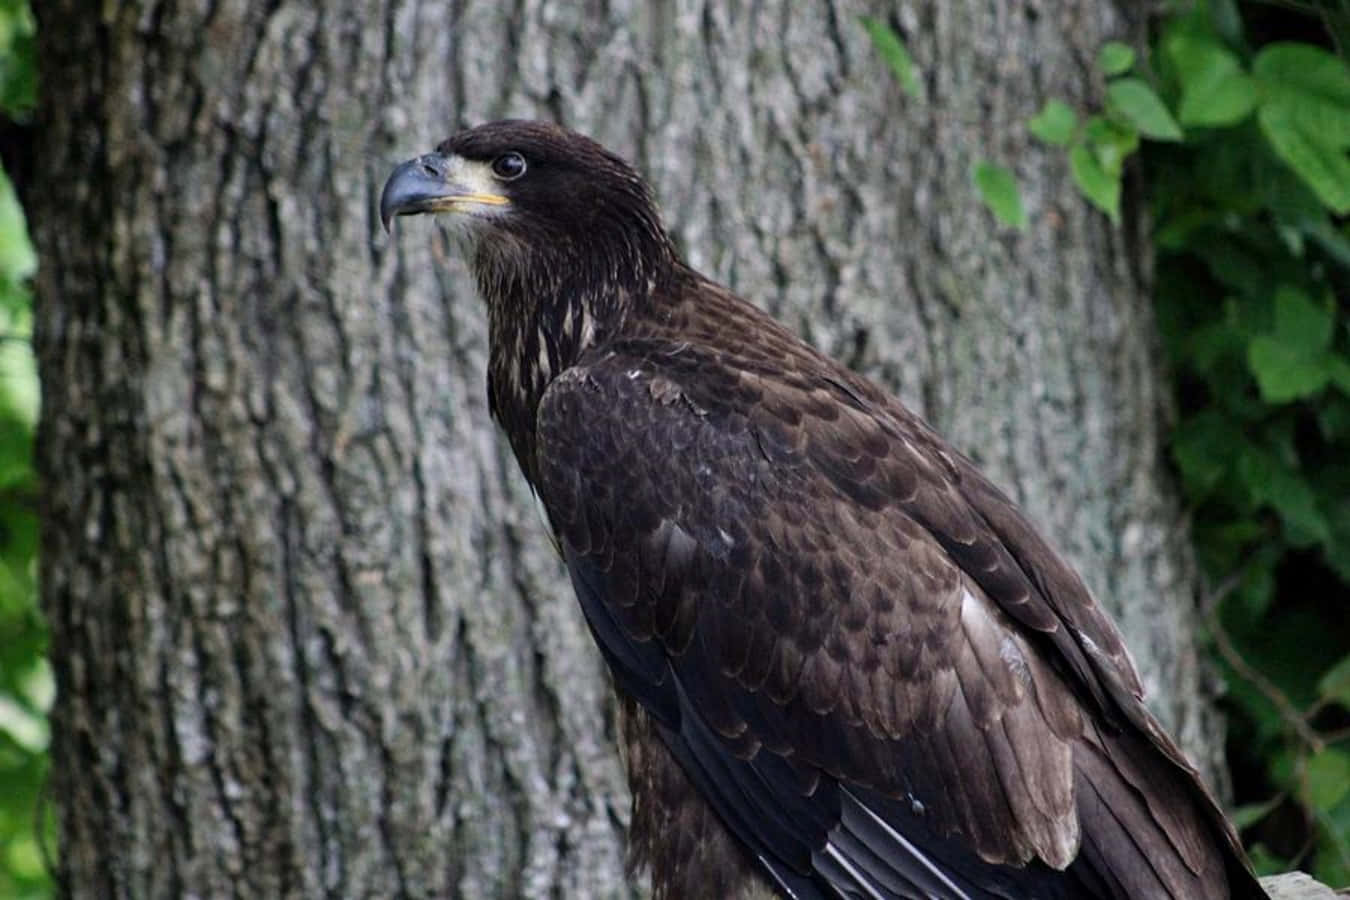 "Young bald eagle regally surveys its domain"